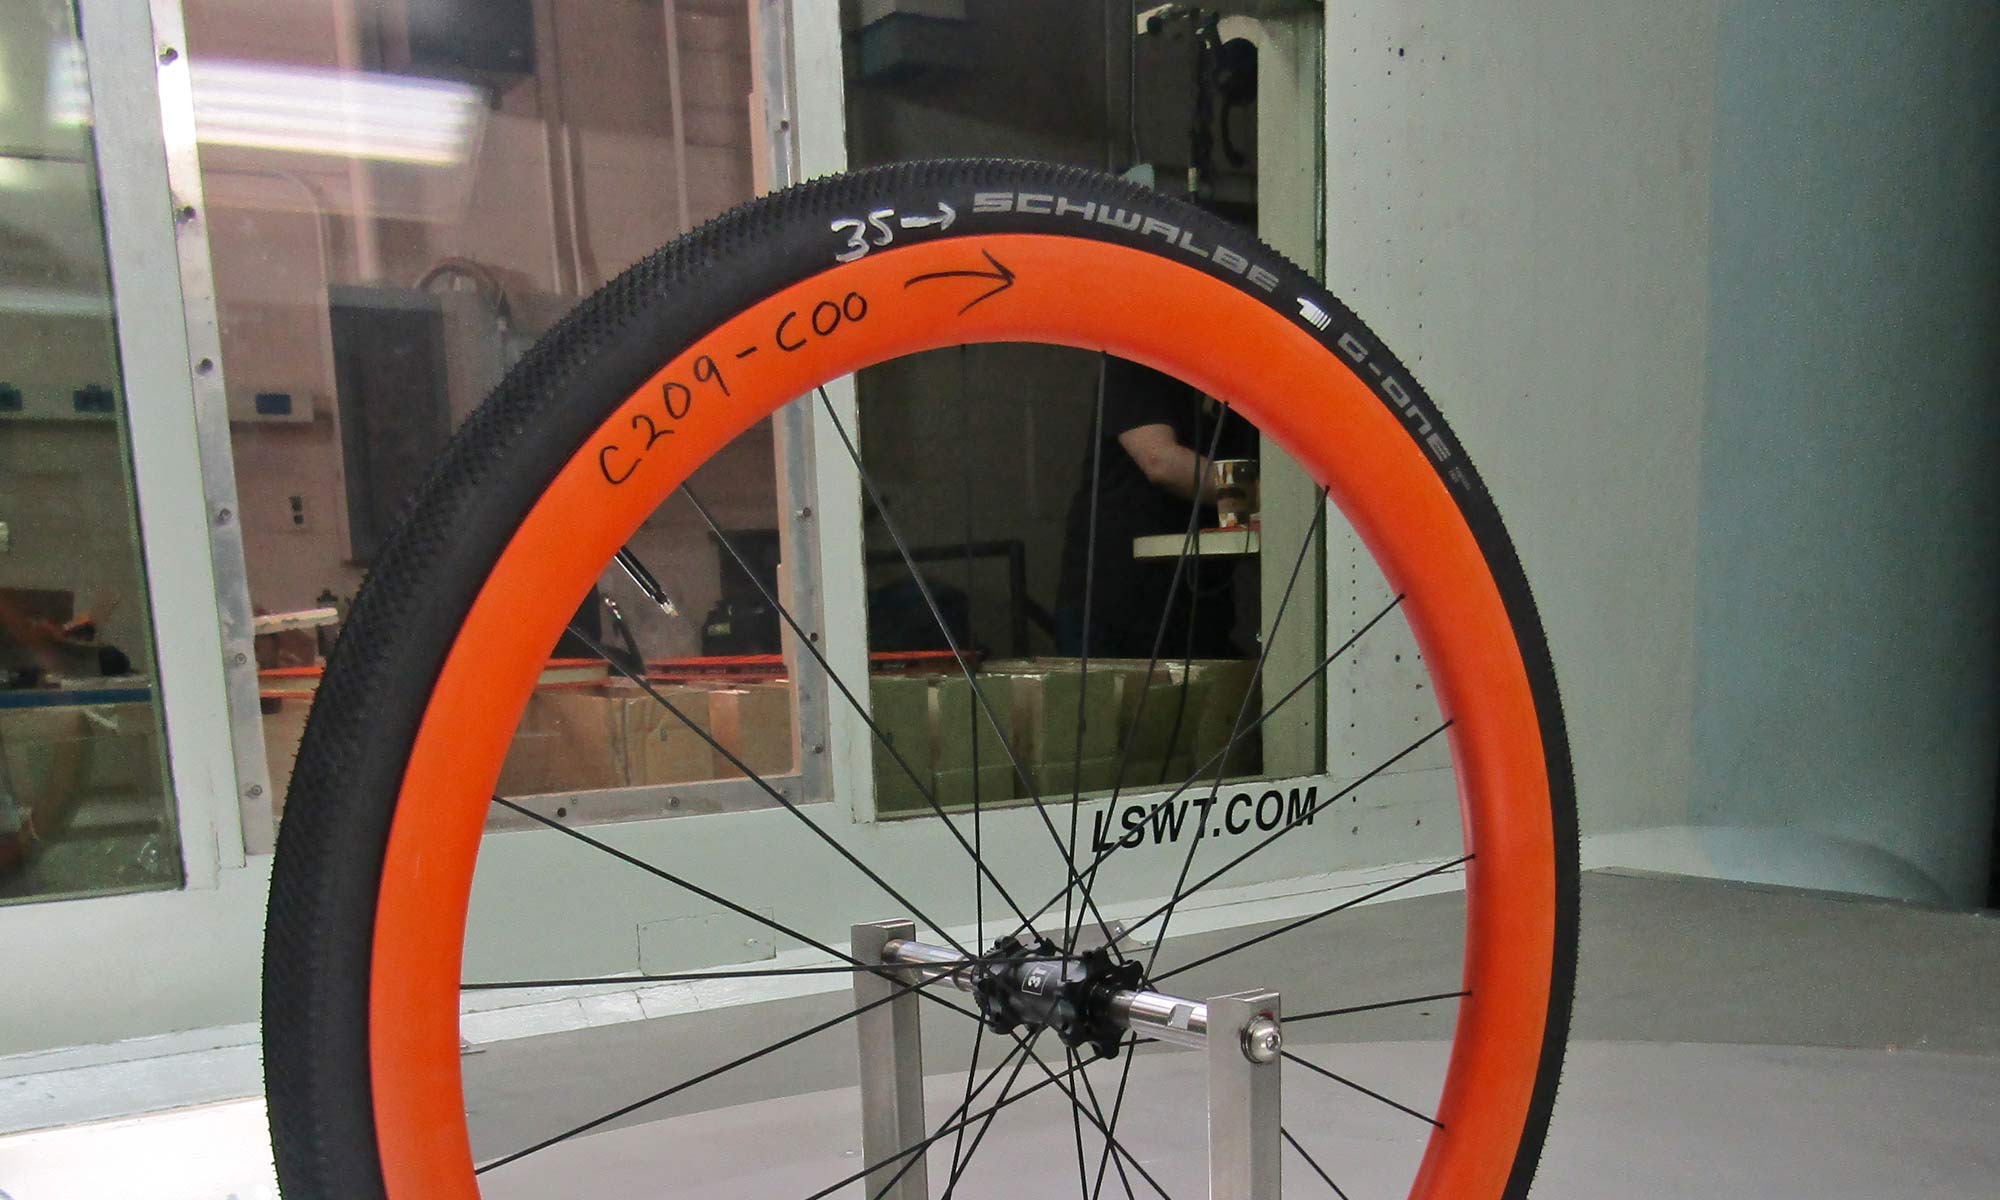 3T-Discus-45-40-LTD-aero-gravel-wheels_worlds-widest-aero-wheel_40mm-wide-29mm-internal-carbon-tubeless-aerodynamic-gravel-bike-wheels_low-speed-wind-tunnel-testing (1).jpg